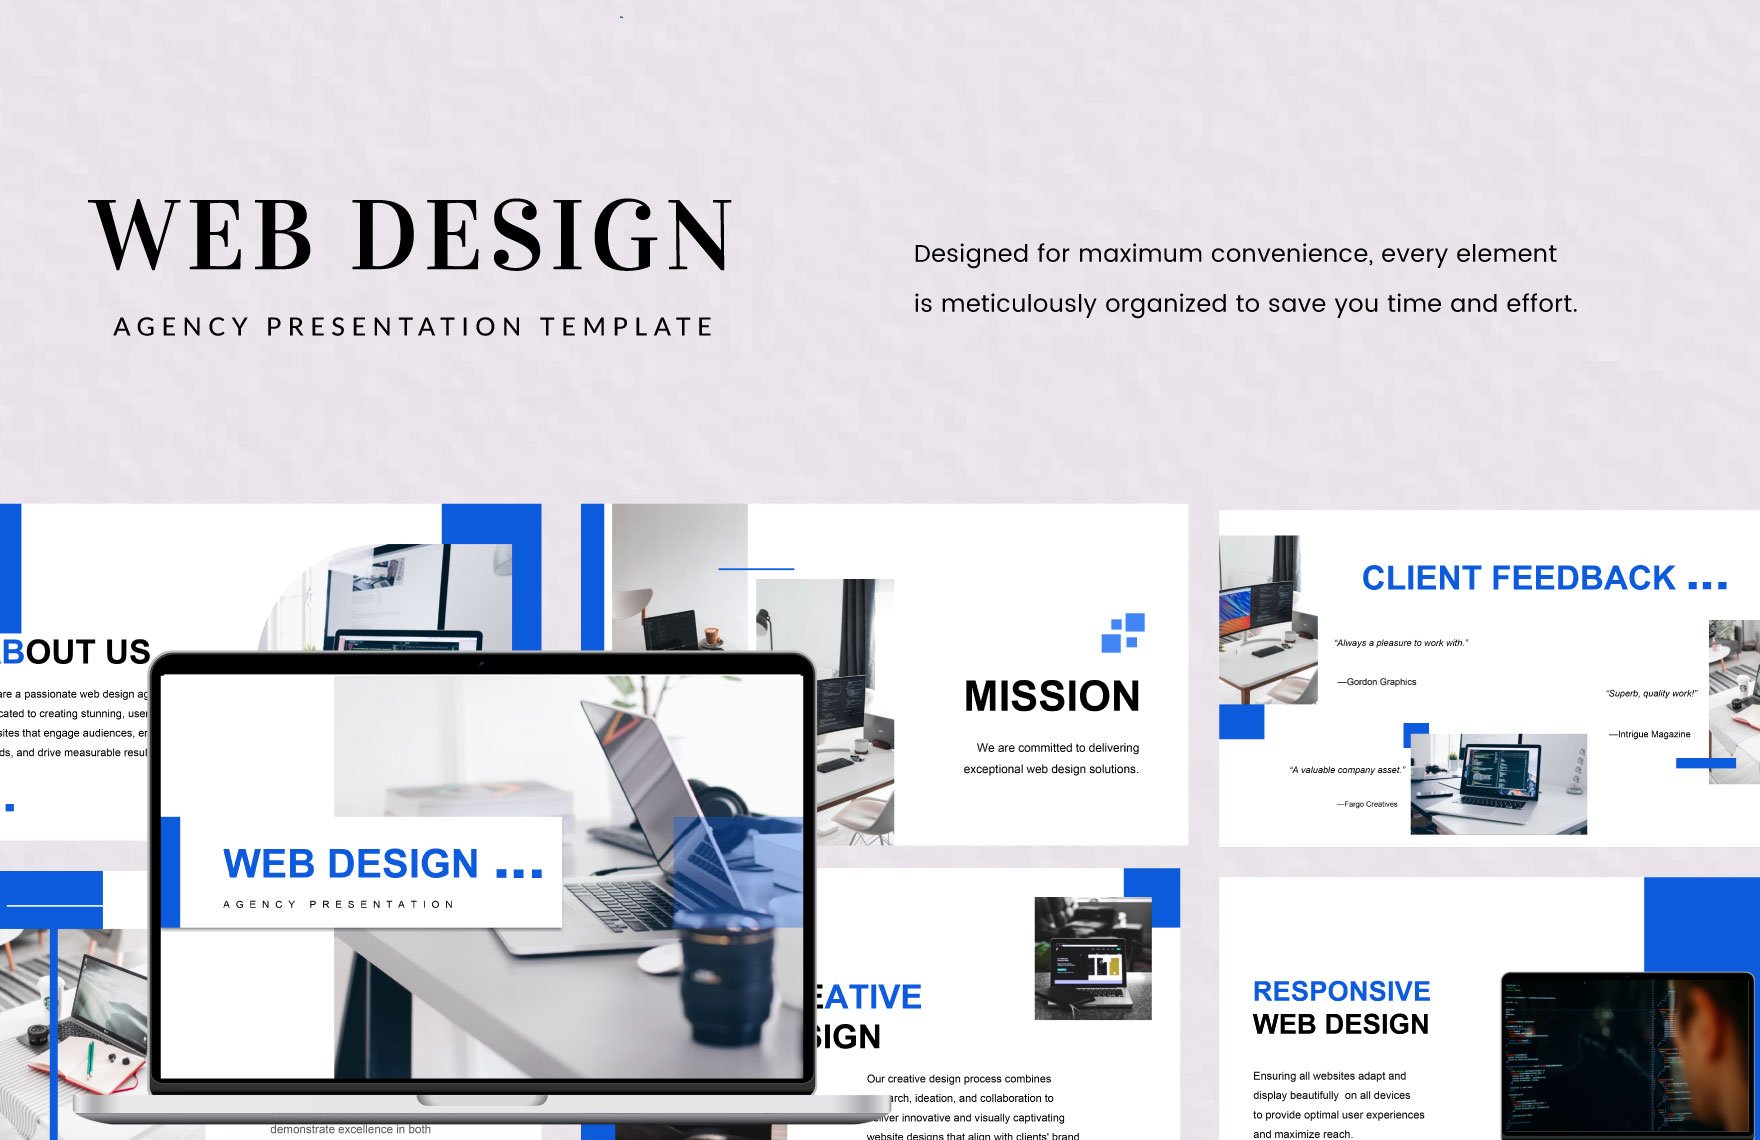 Web Design Agency Presentation